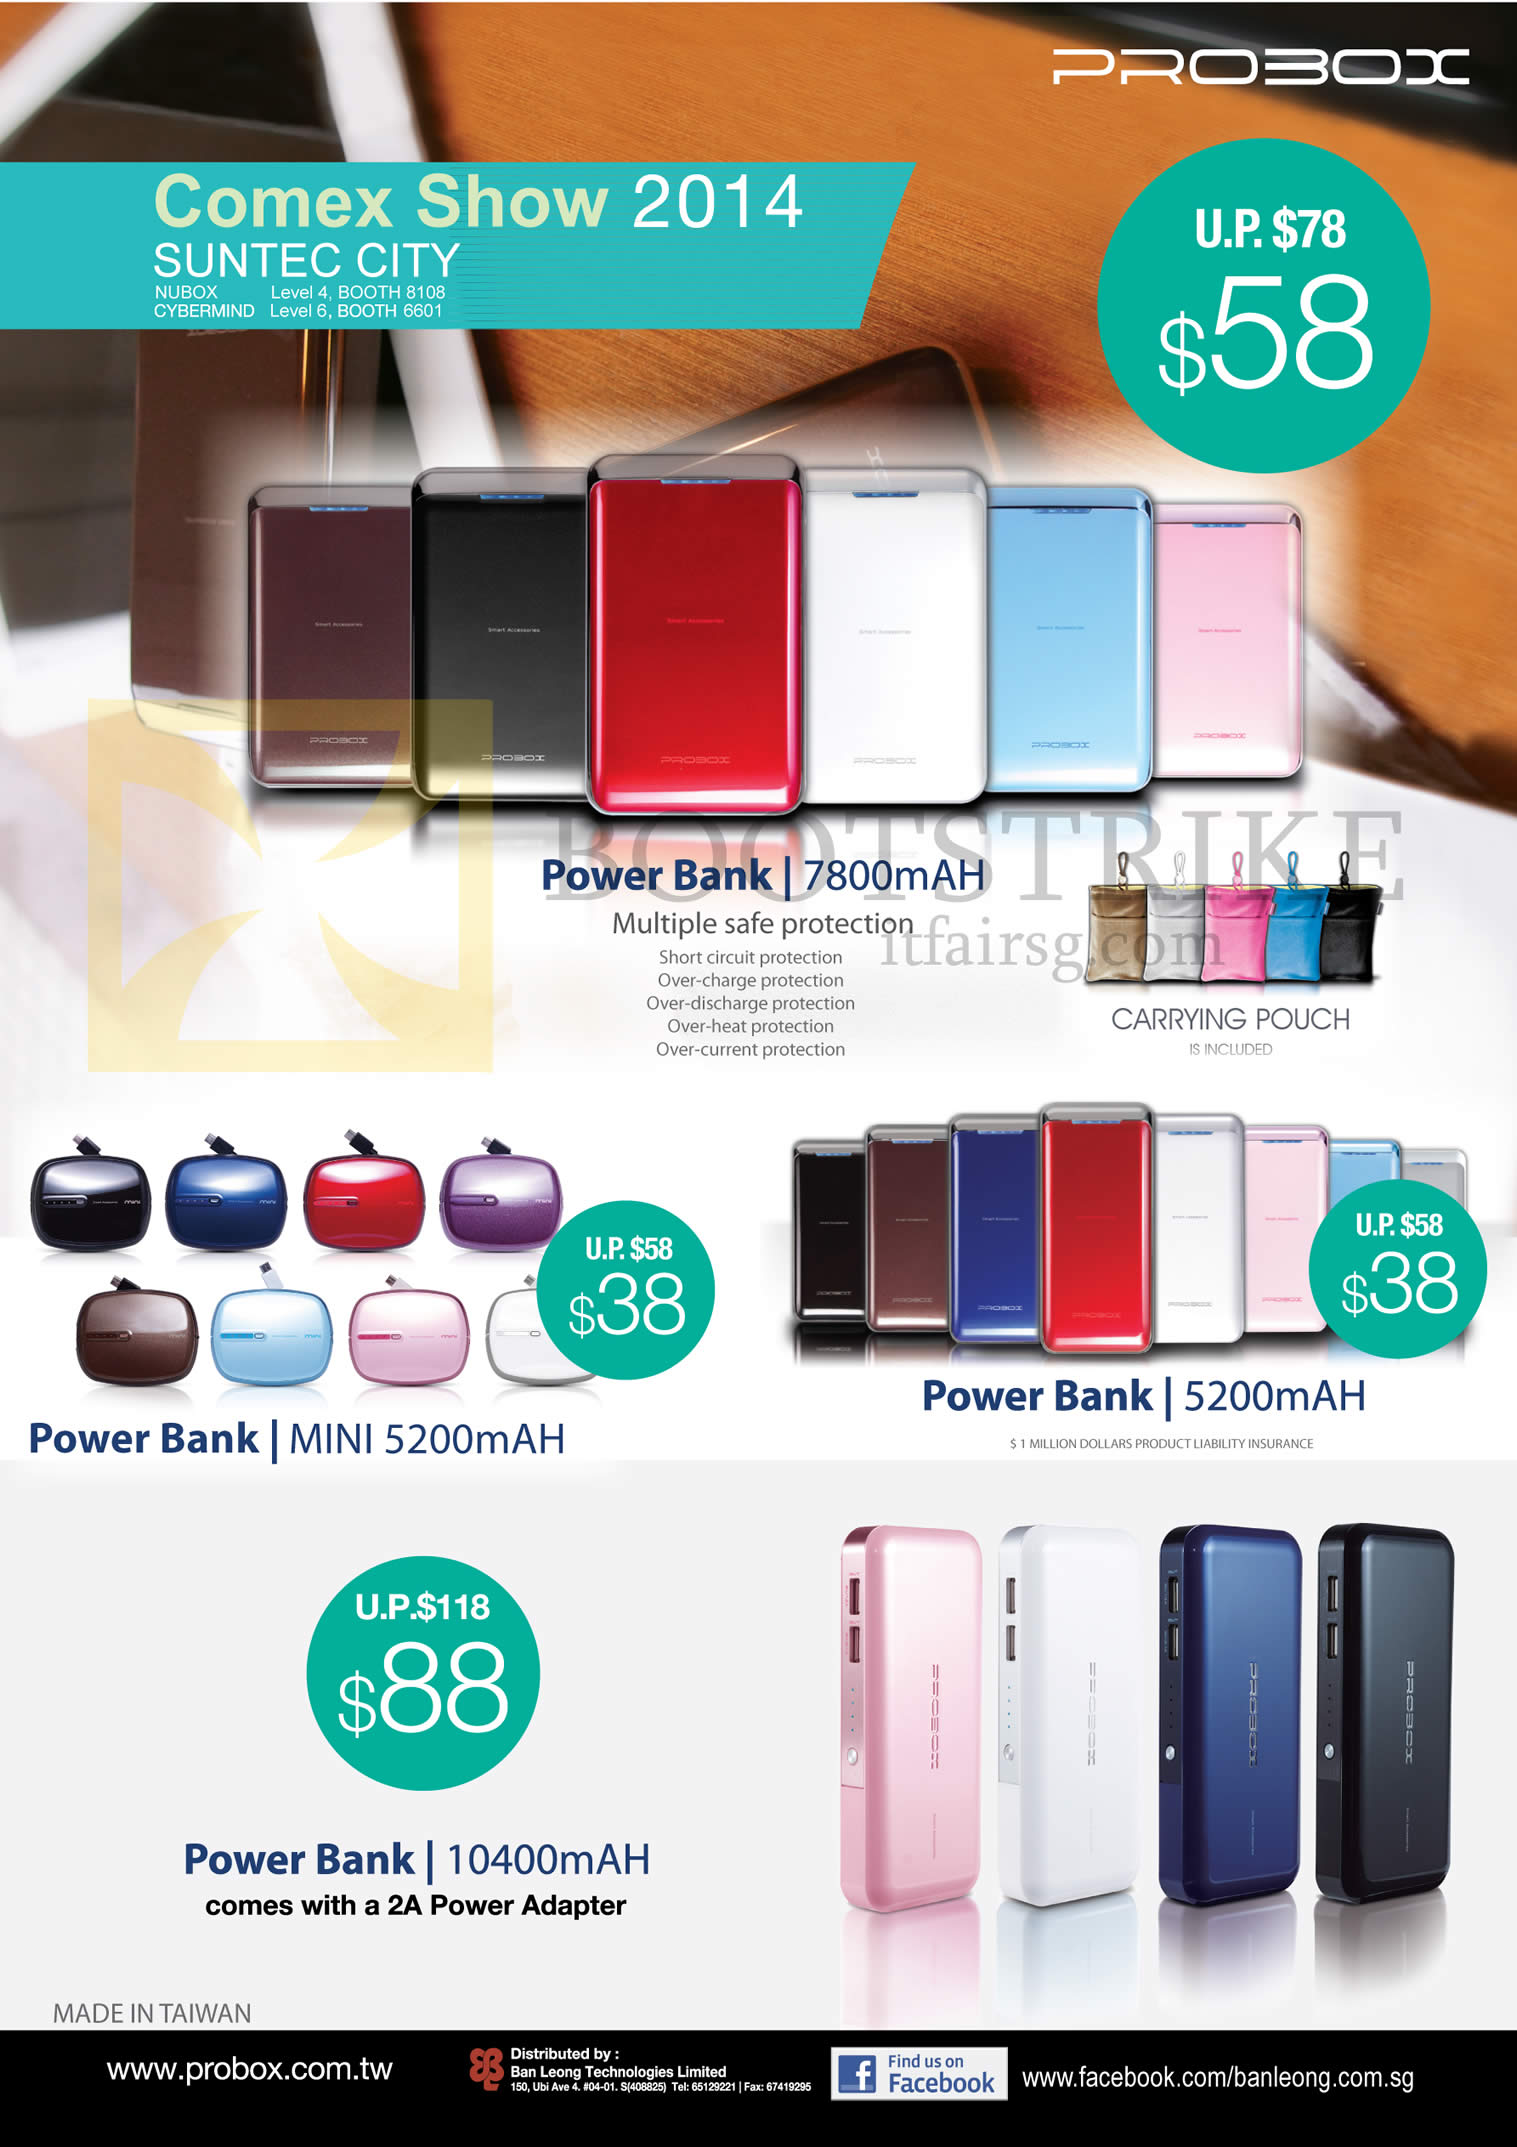 COMEX 2014 price list image brochure of Probox Power Banks 7800mAH, Mini 5200mAH, 5200mAH, 10400mAH